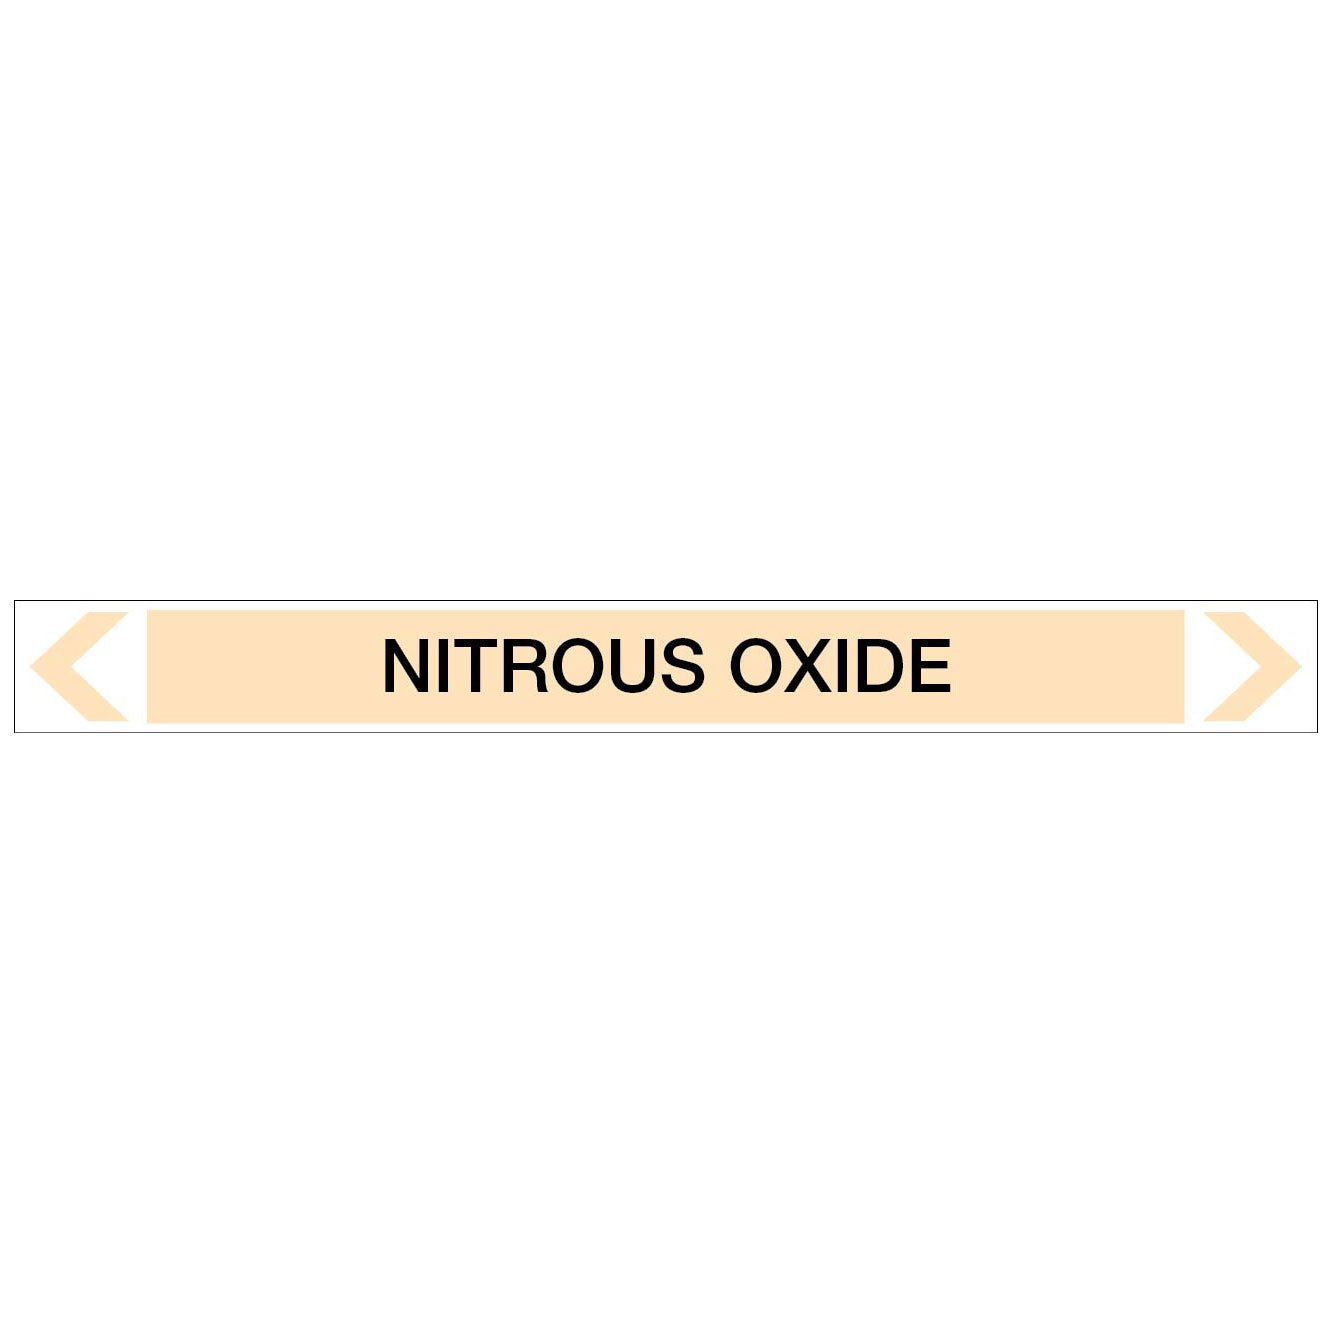 Gases - Nitrous Oxide - Pipe Marker Sticker